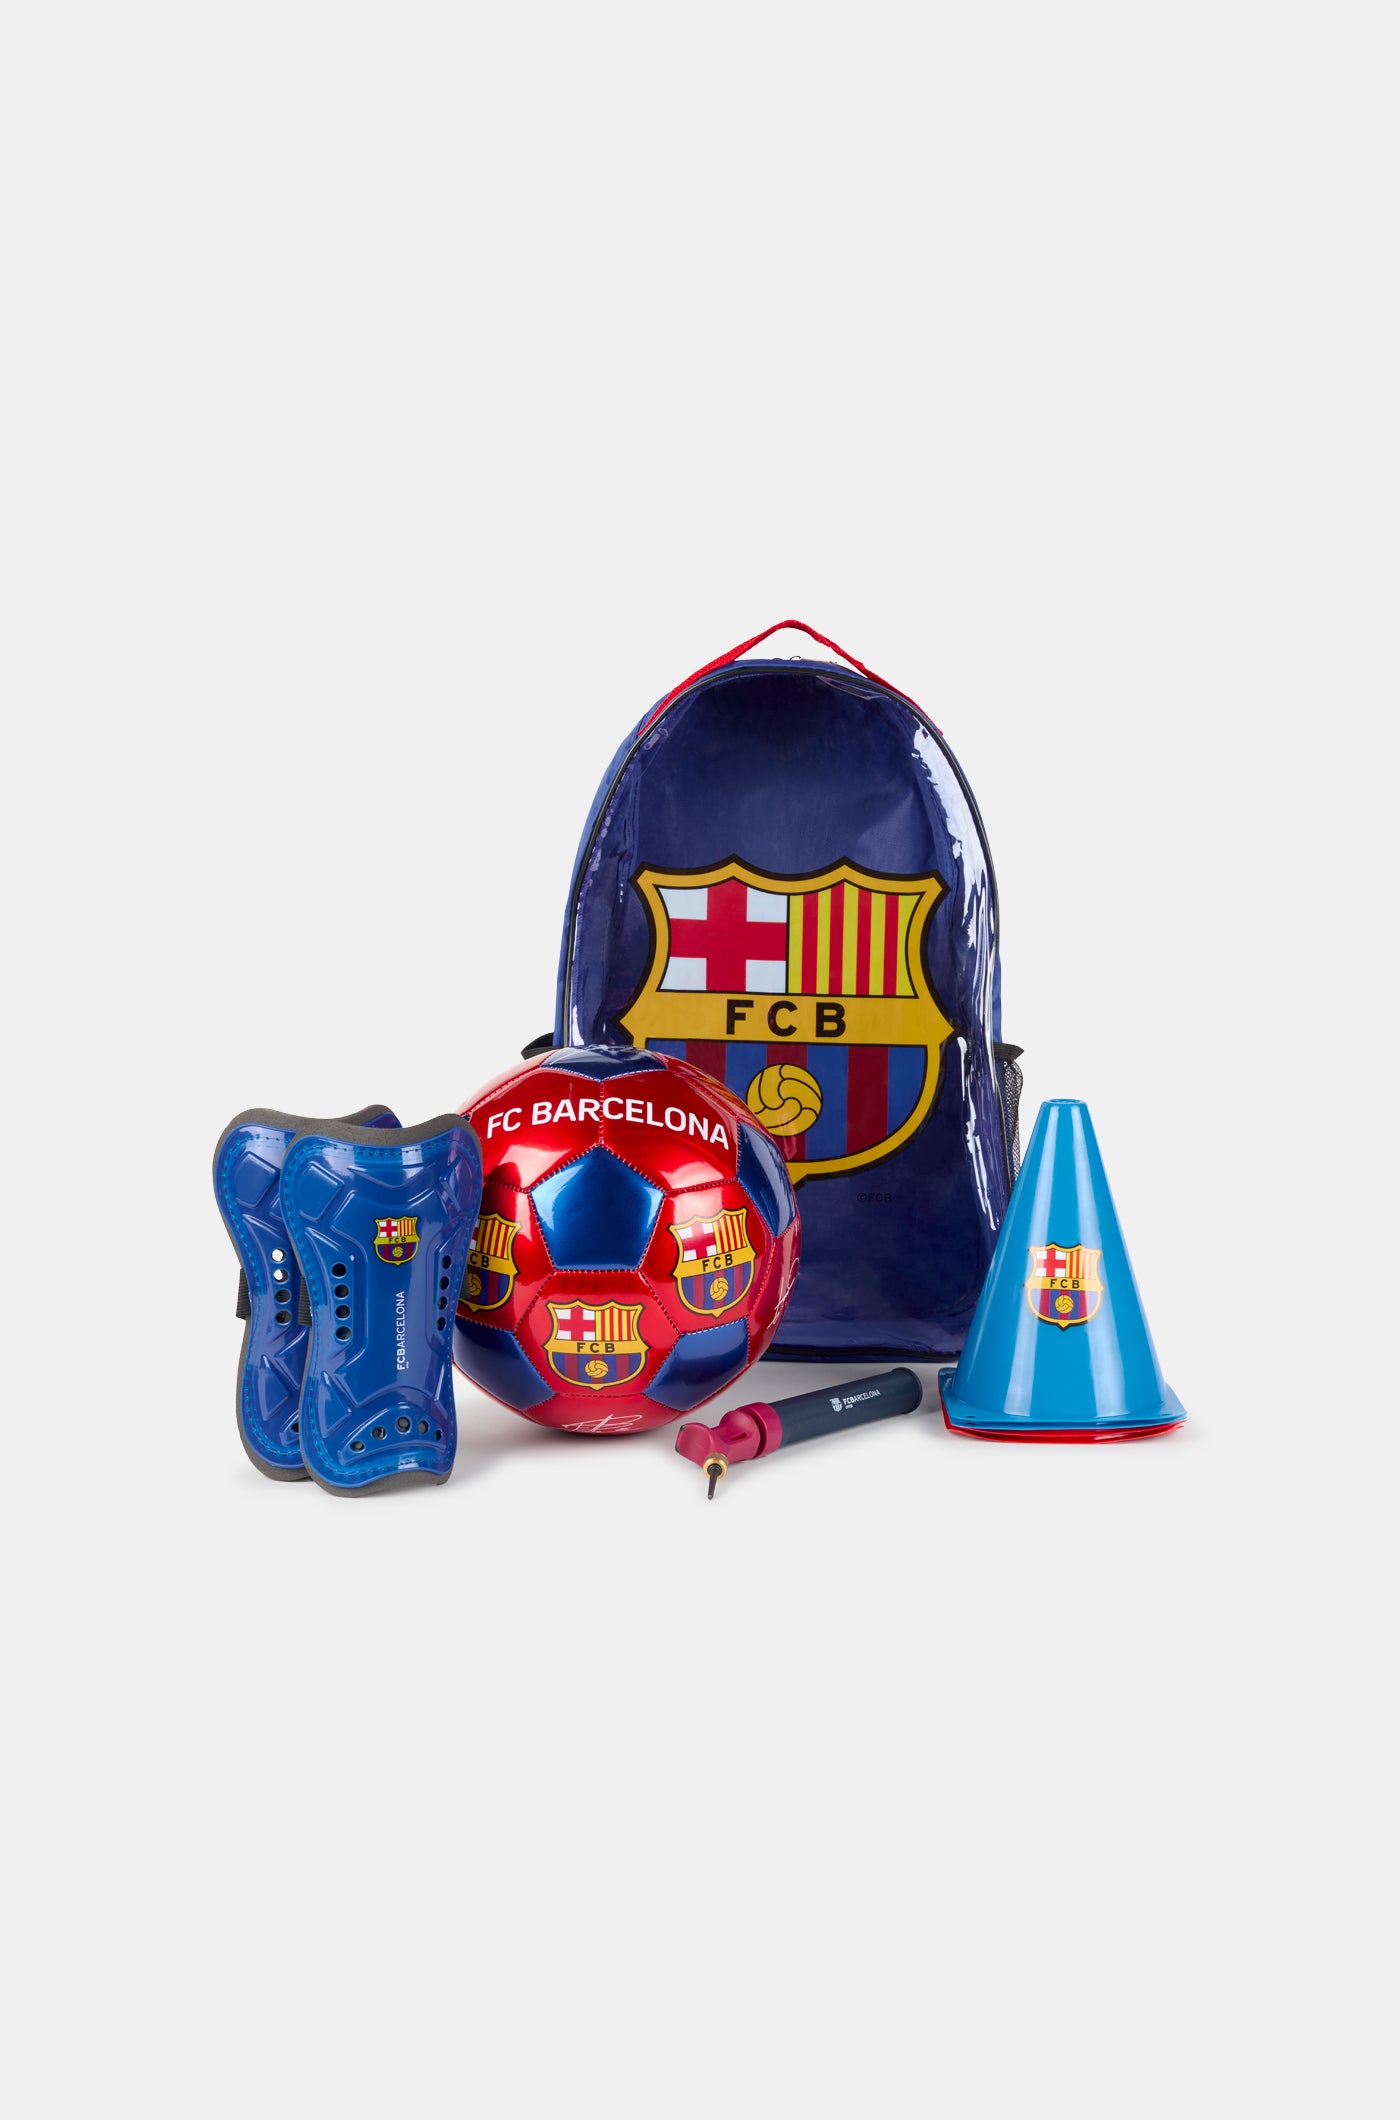 FC Barcelona Training Kit